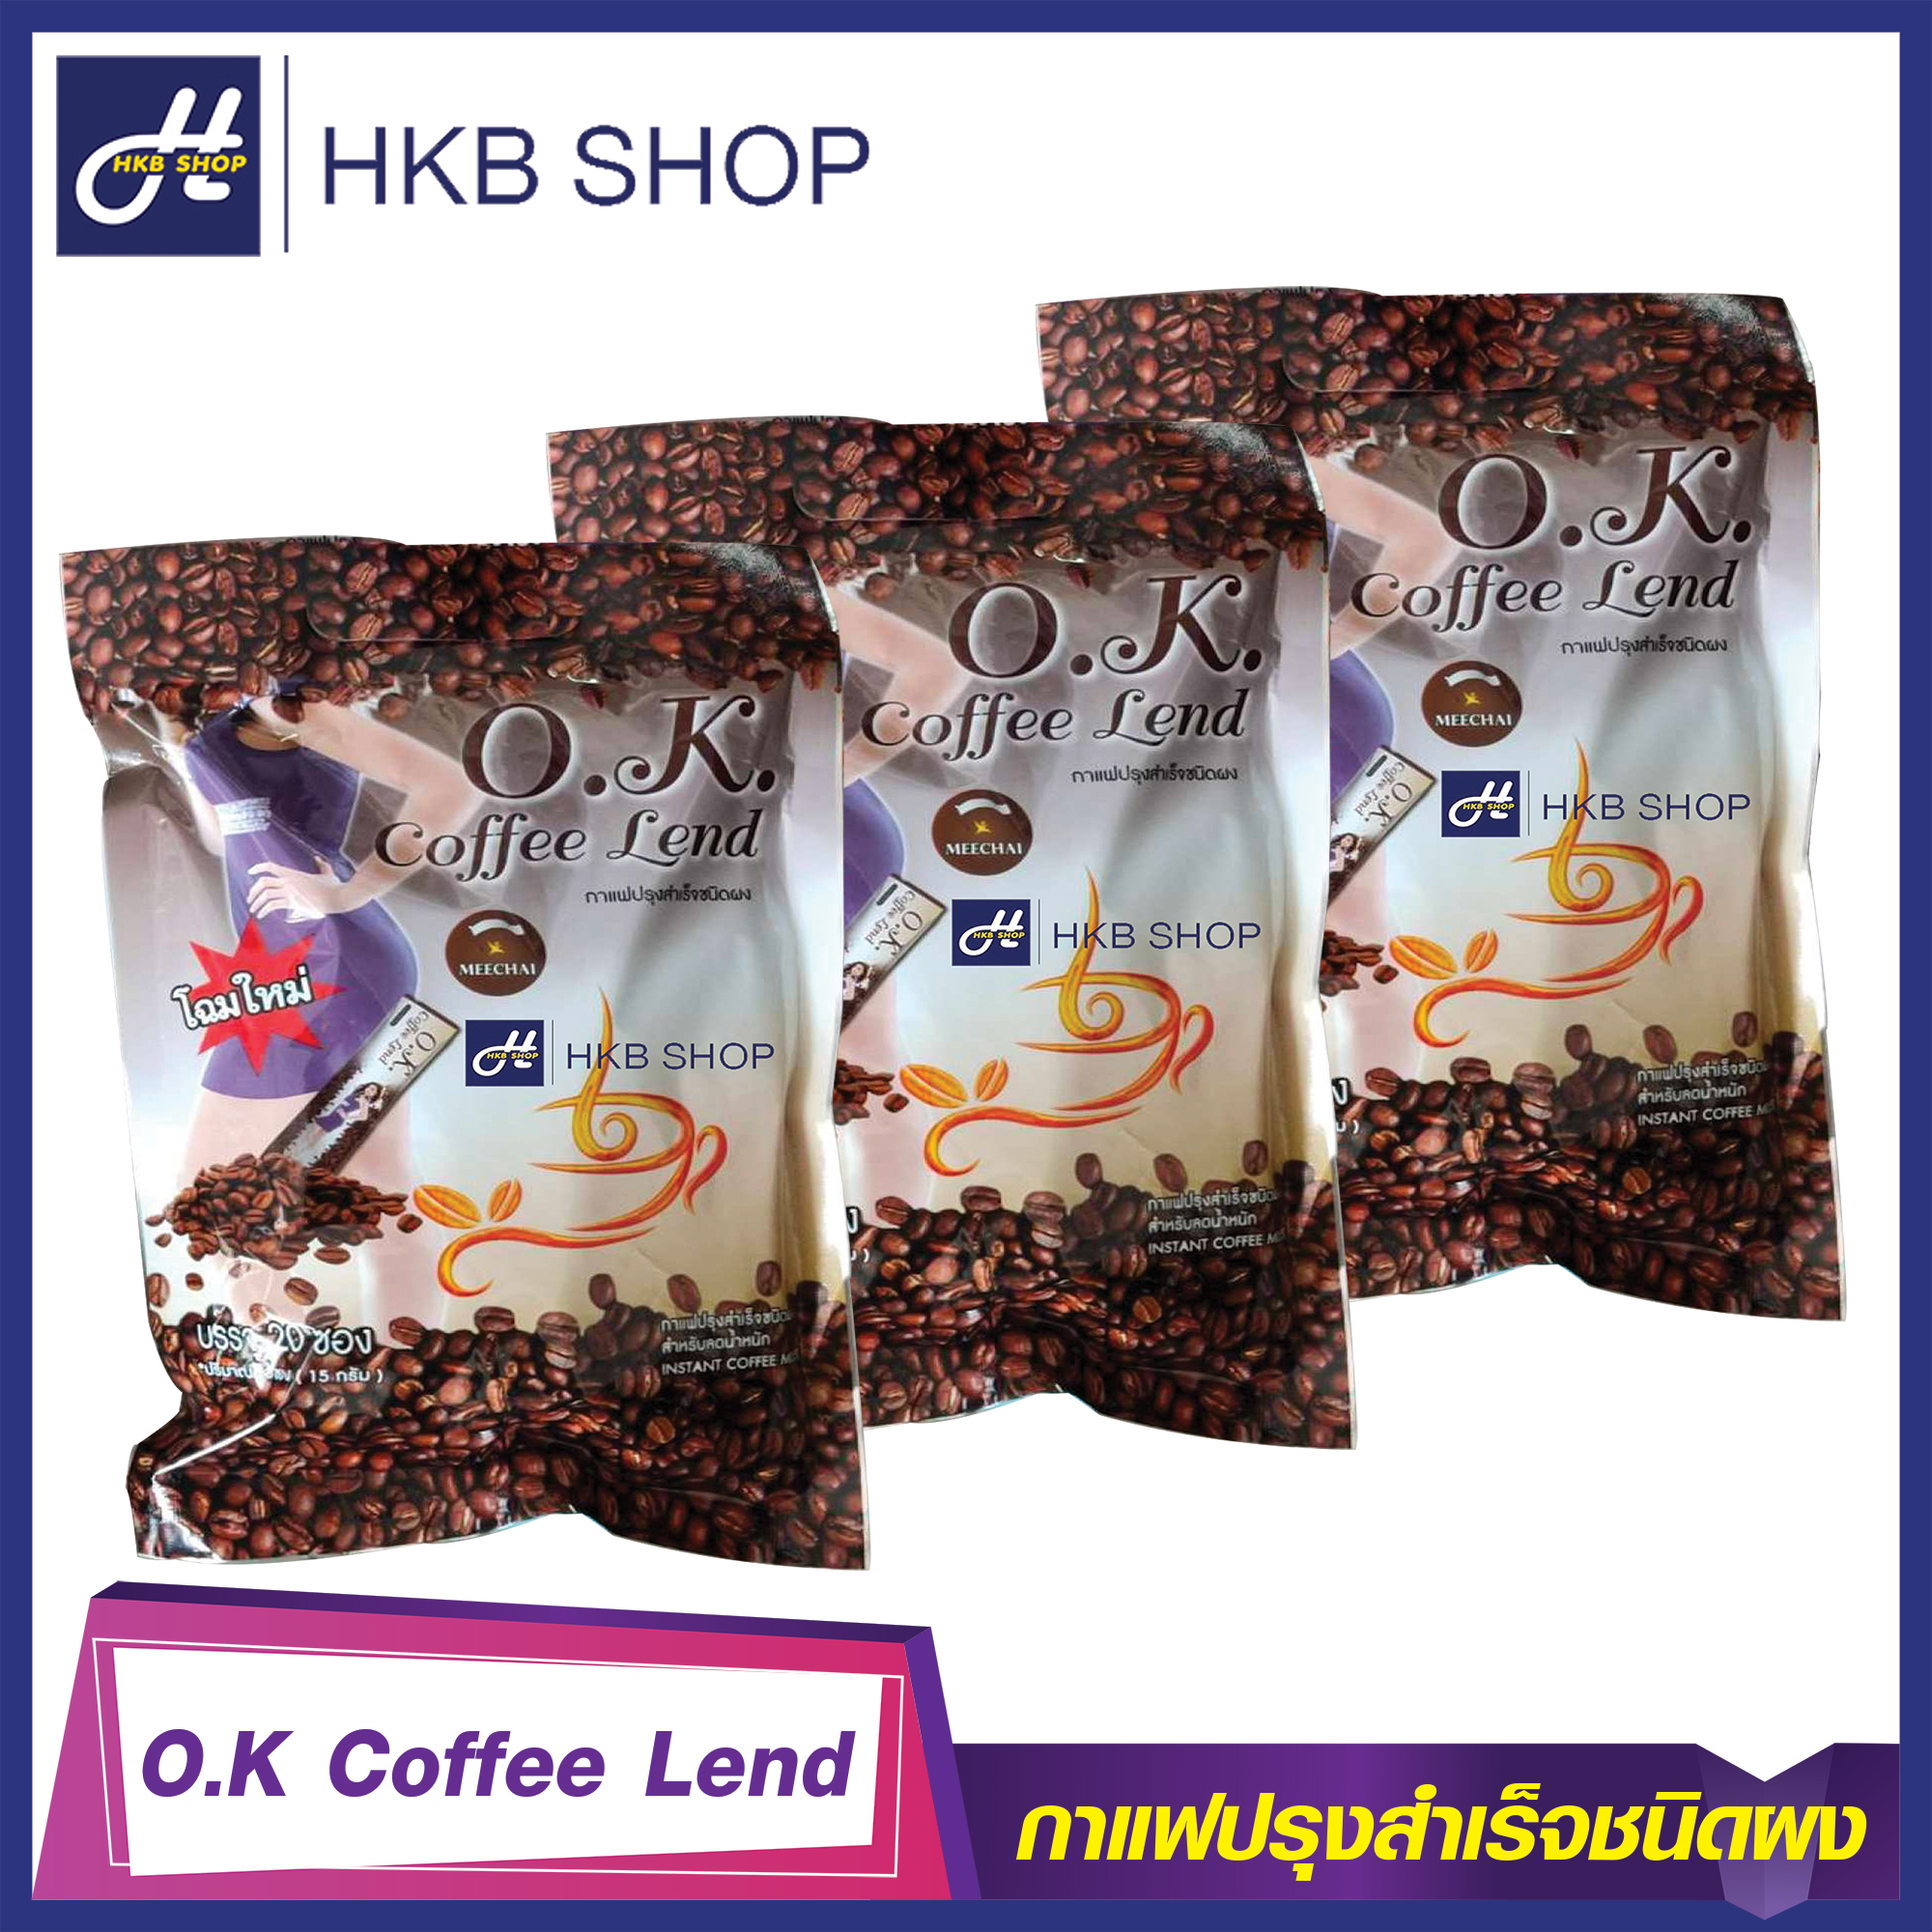 ⚡️3ห่อ⚡️ O.K. Coffee Lend โอเค คอฟฟี่ เลนด์ กาแฟปรุงสำเร็จชนิดผง By HKB SHOP